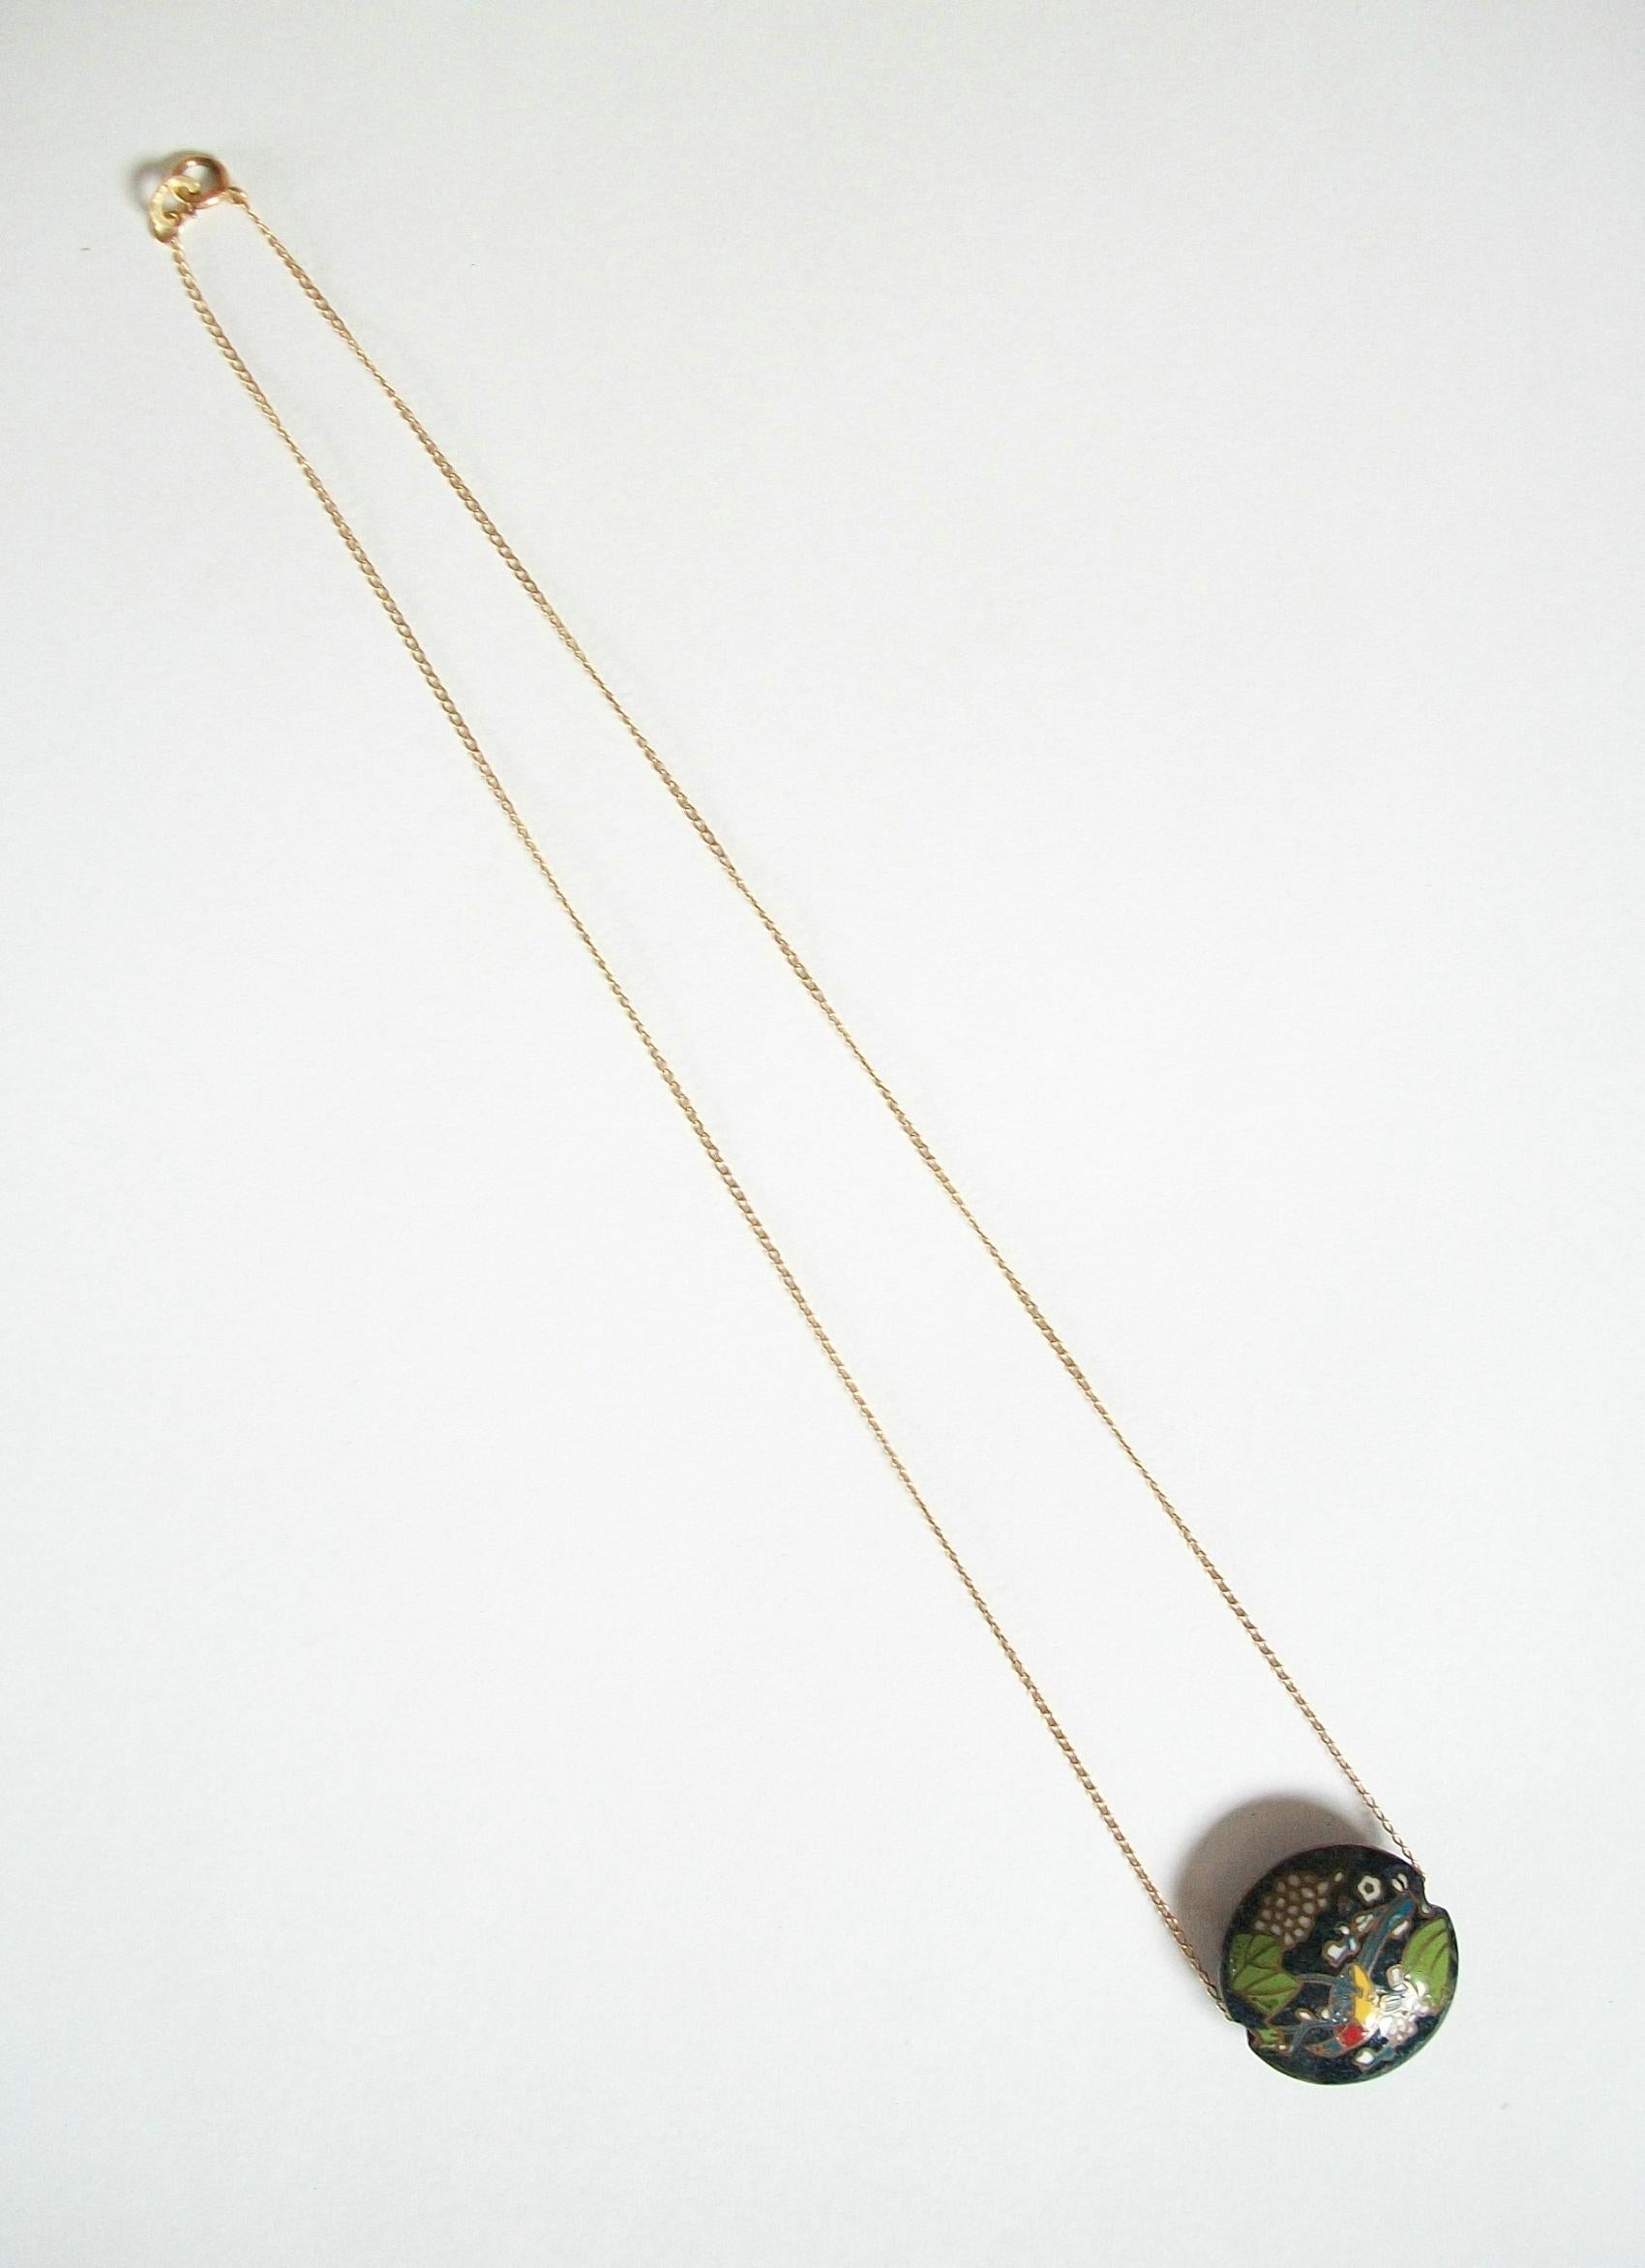 Modern Krementz, 14K Gold Chain Necklace with Enamel Pendant, U.S.A, 20th Century For Sale